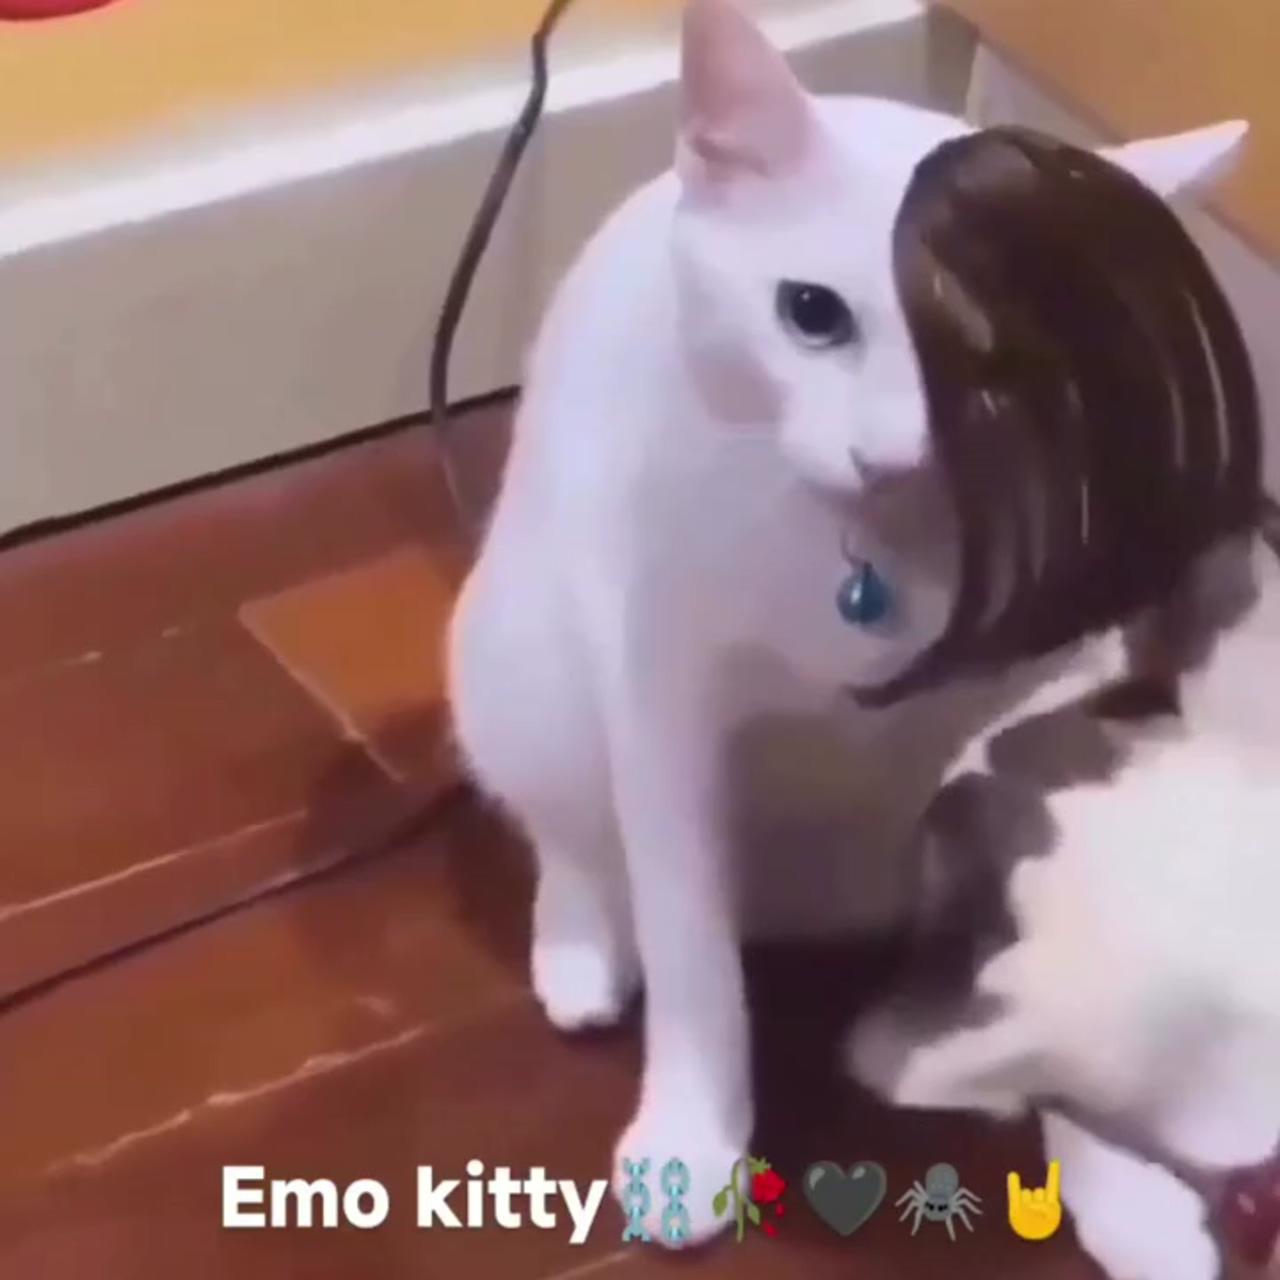 Emo kitty,,; funny cute cats